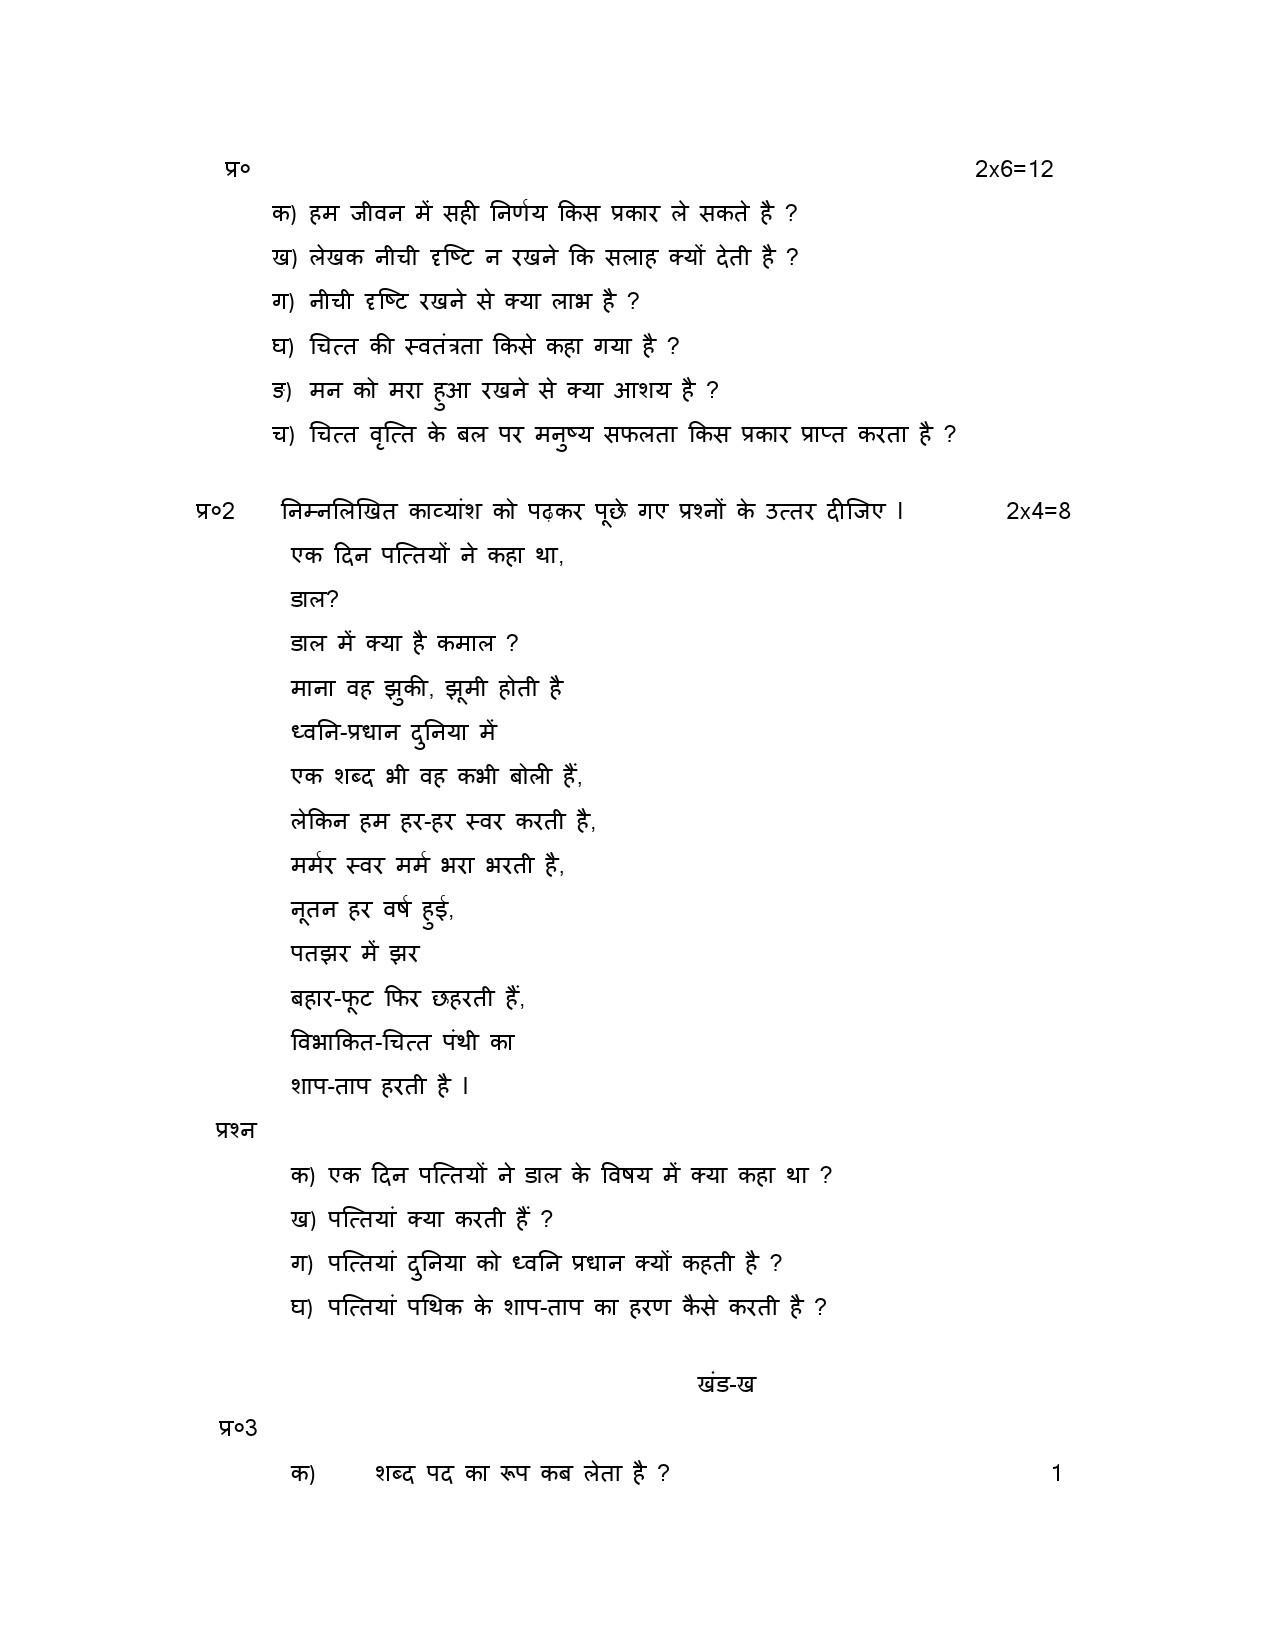 Hindi B CBSE Class X Sample Question Paper 2015 16 - Image 2